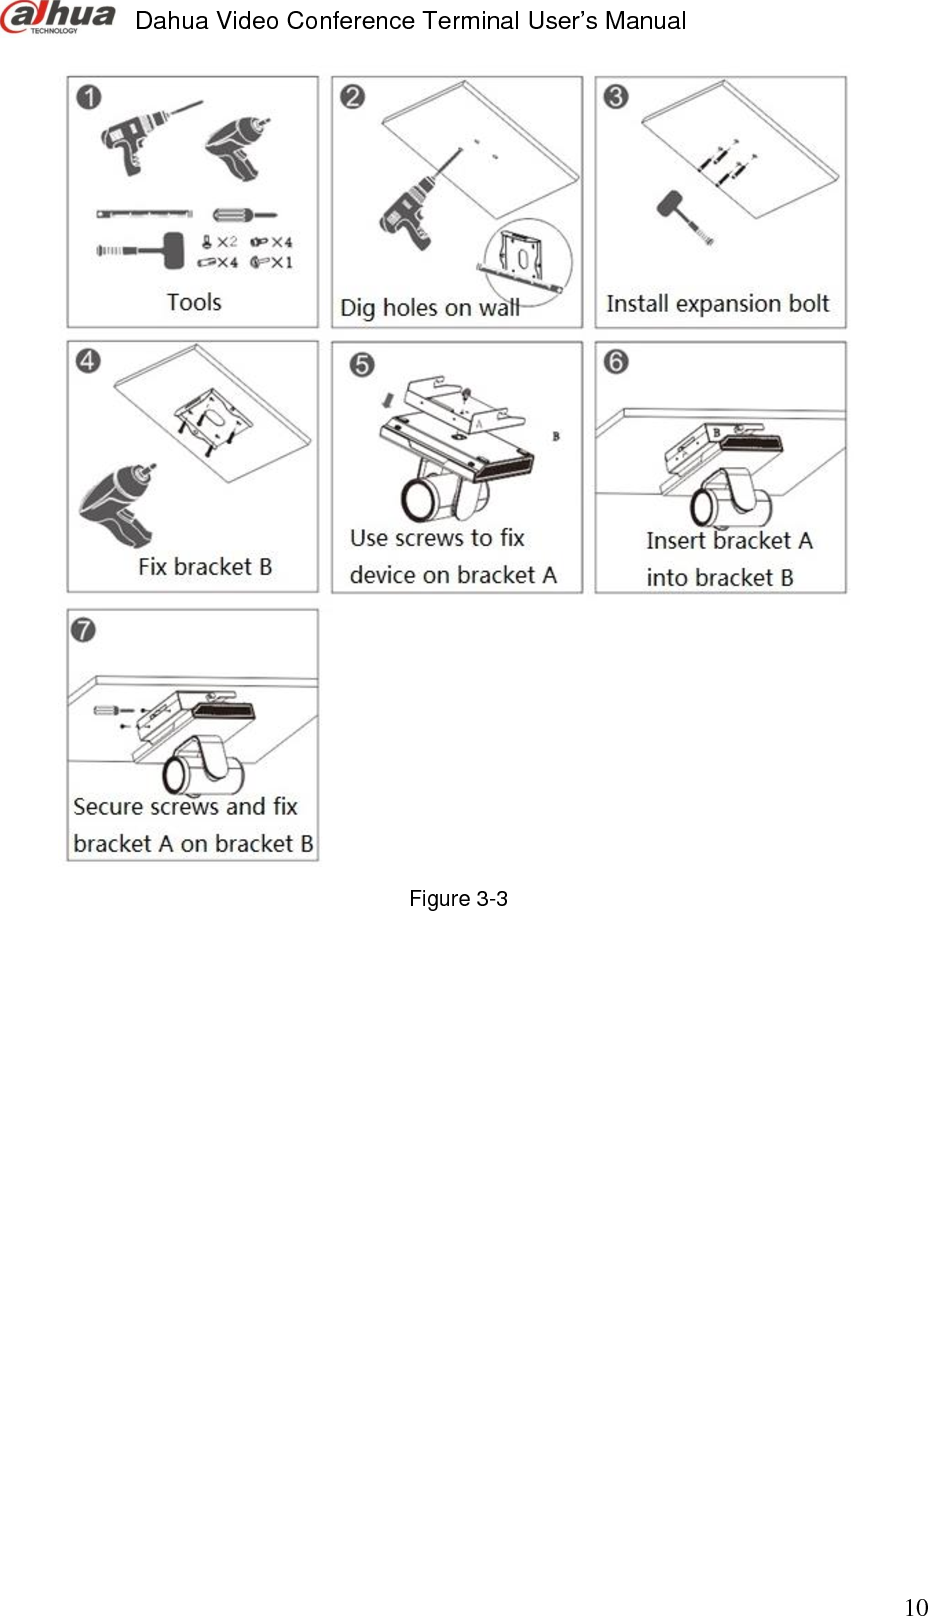  Dahua Video Conference Terminal User’s Manual                                                                              10  Figure 3-3                    